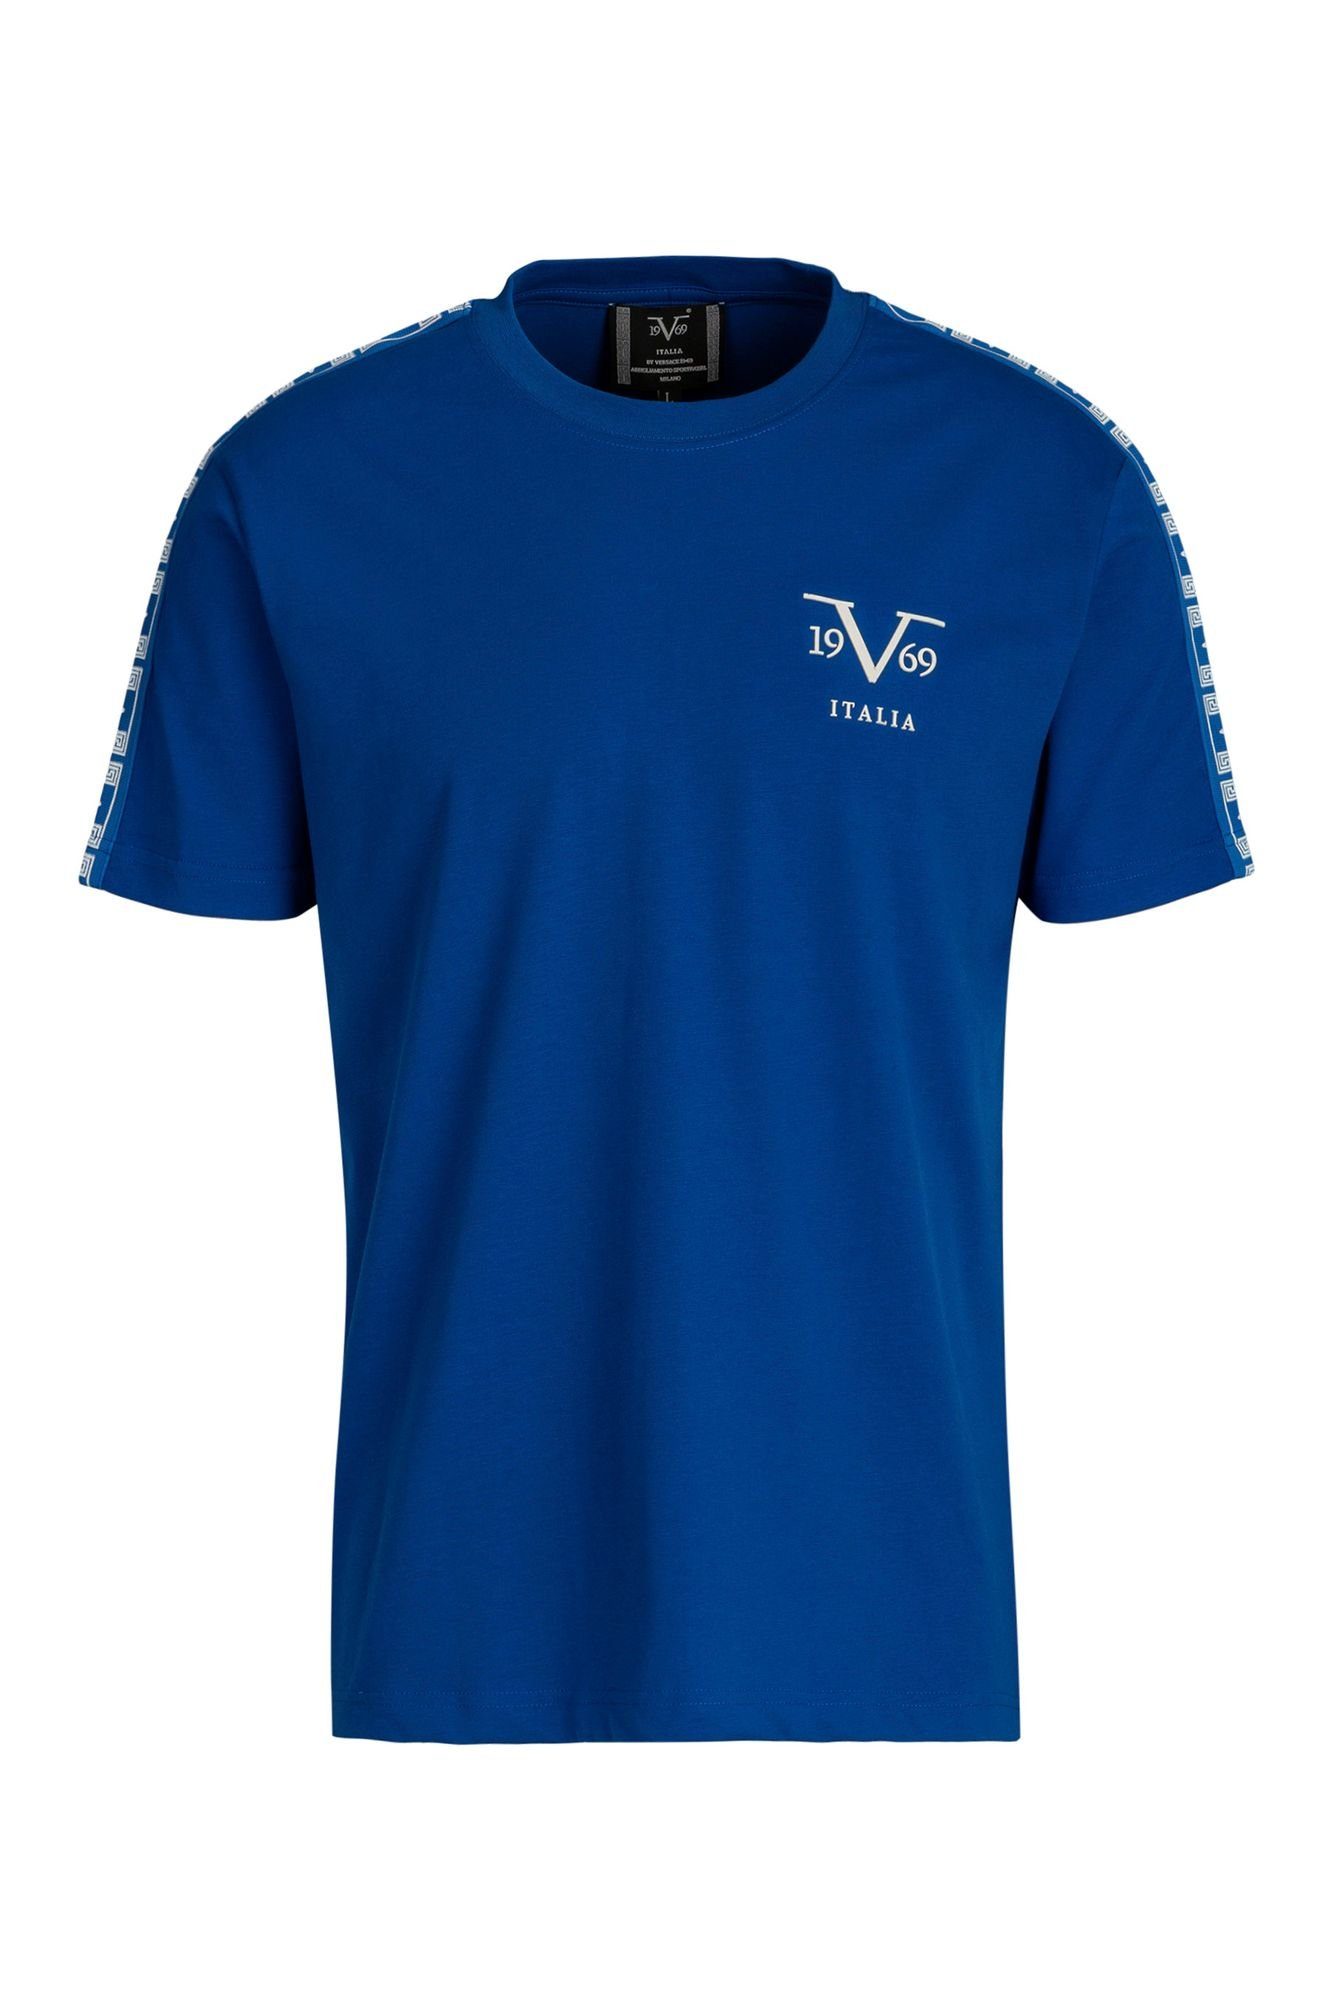 19V69 Italia by Versace Fabio T-Shirt